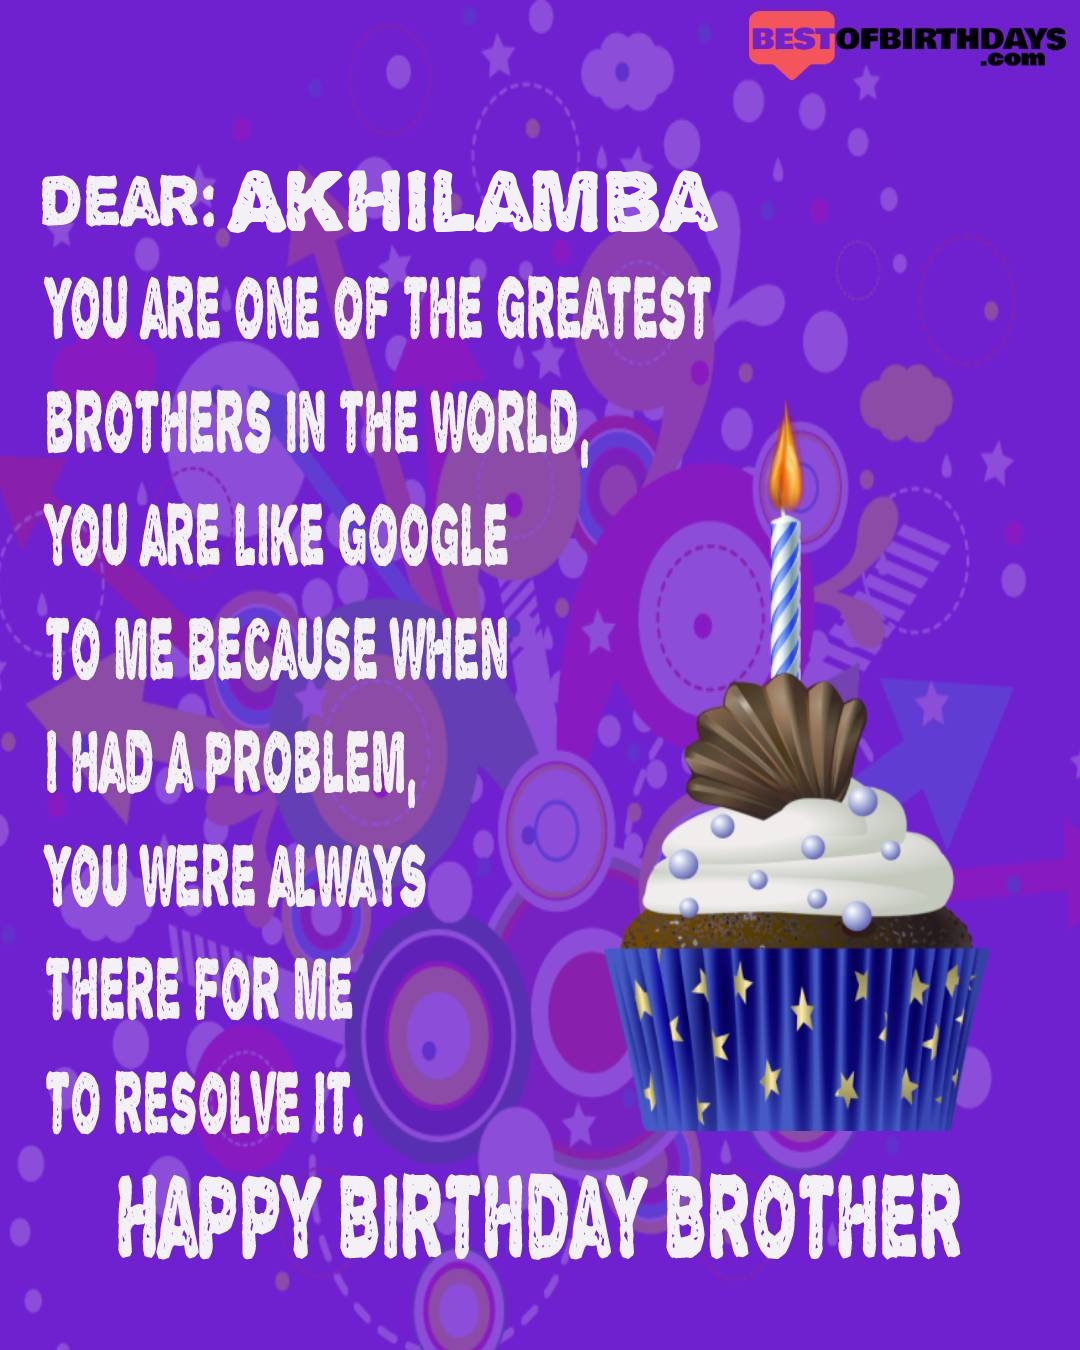 Happy birthday akhilamba bhai brother bro